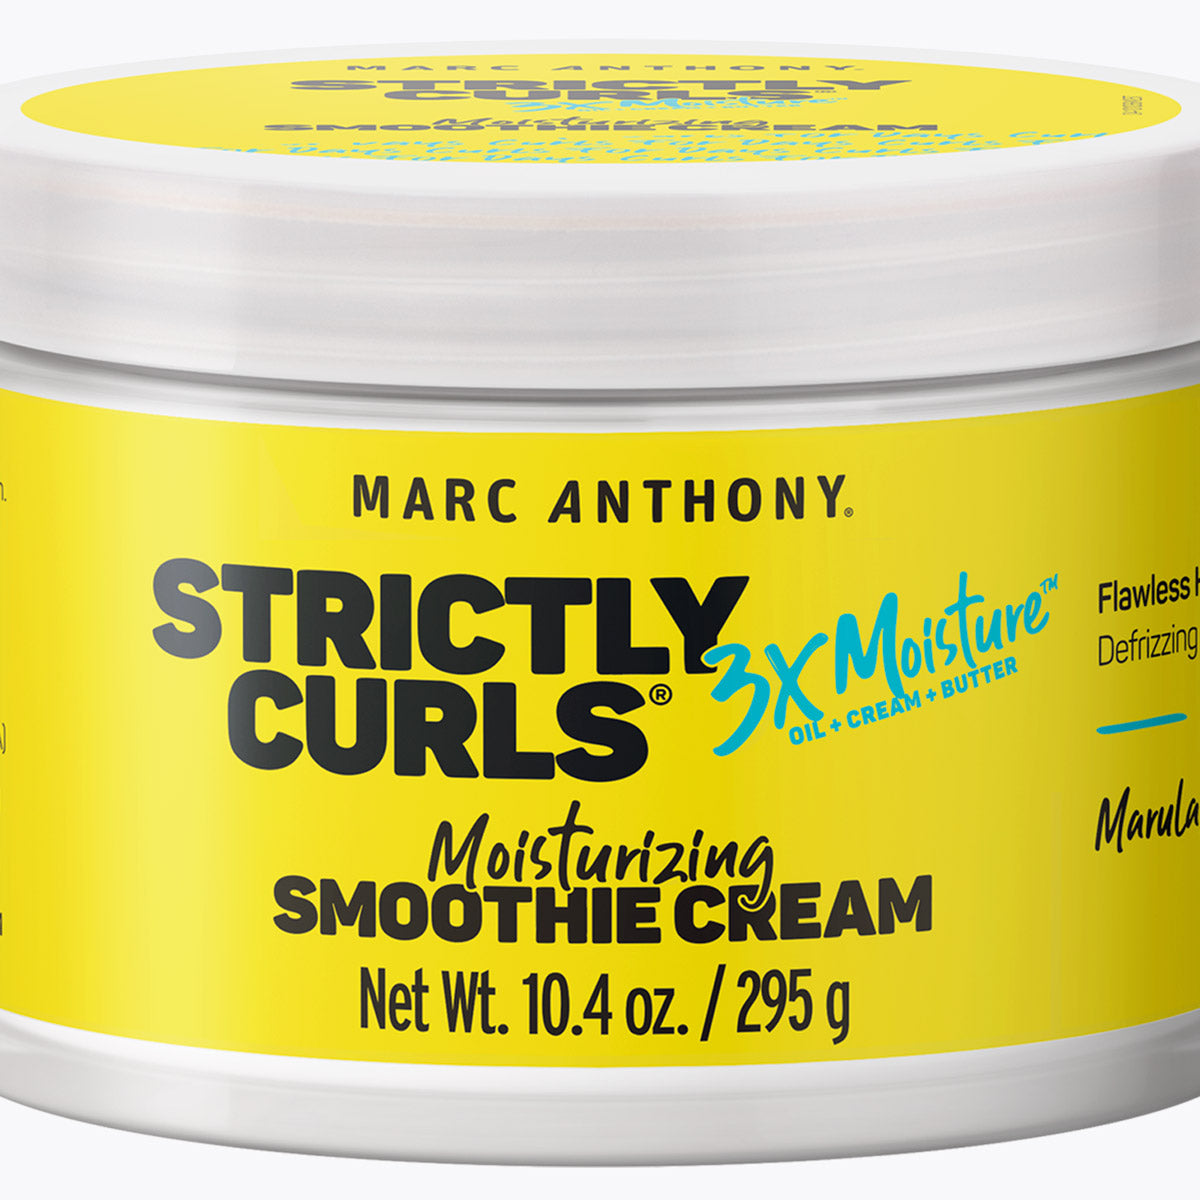 Strictly Curls® 3X Moisture <br> Moisturizing Smoothie